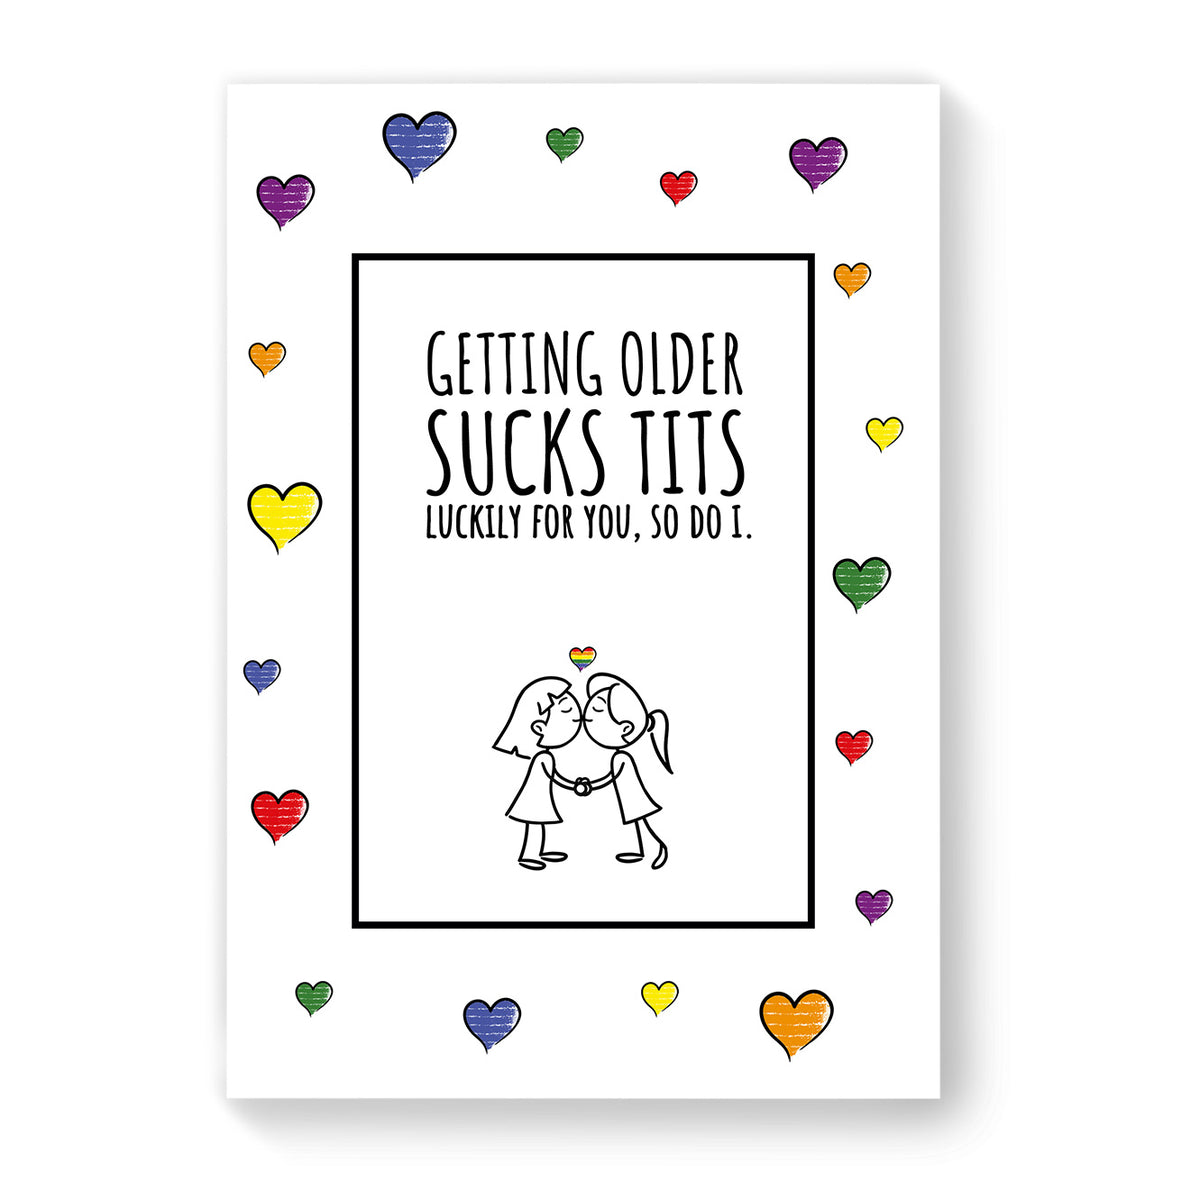 Getting older sucks tits - Lesbian Gay Birthday Card - White Heart | Gift